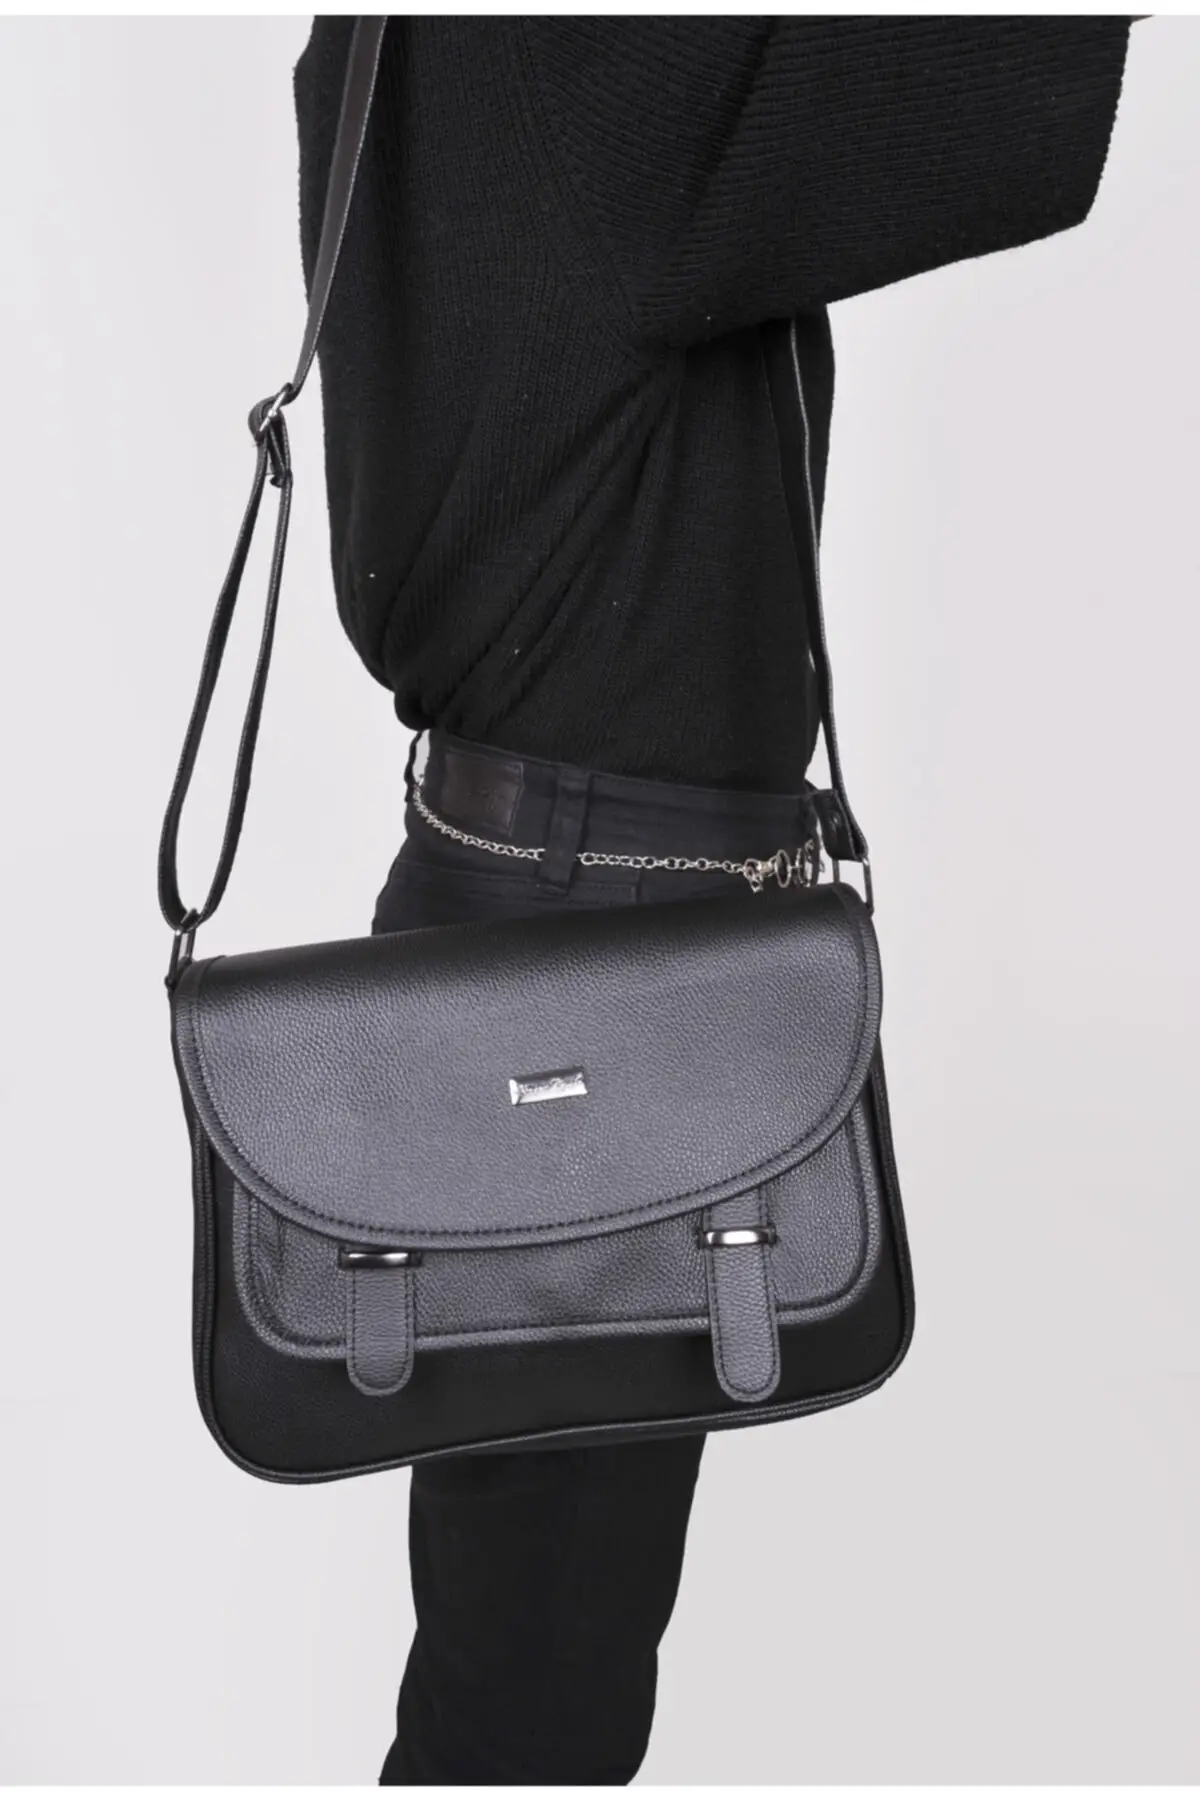 Women Black Color Flap Faux Leather Shoulder Bag 2021 Fashion Stylish Remarkable Convenient Spring Summer Design